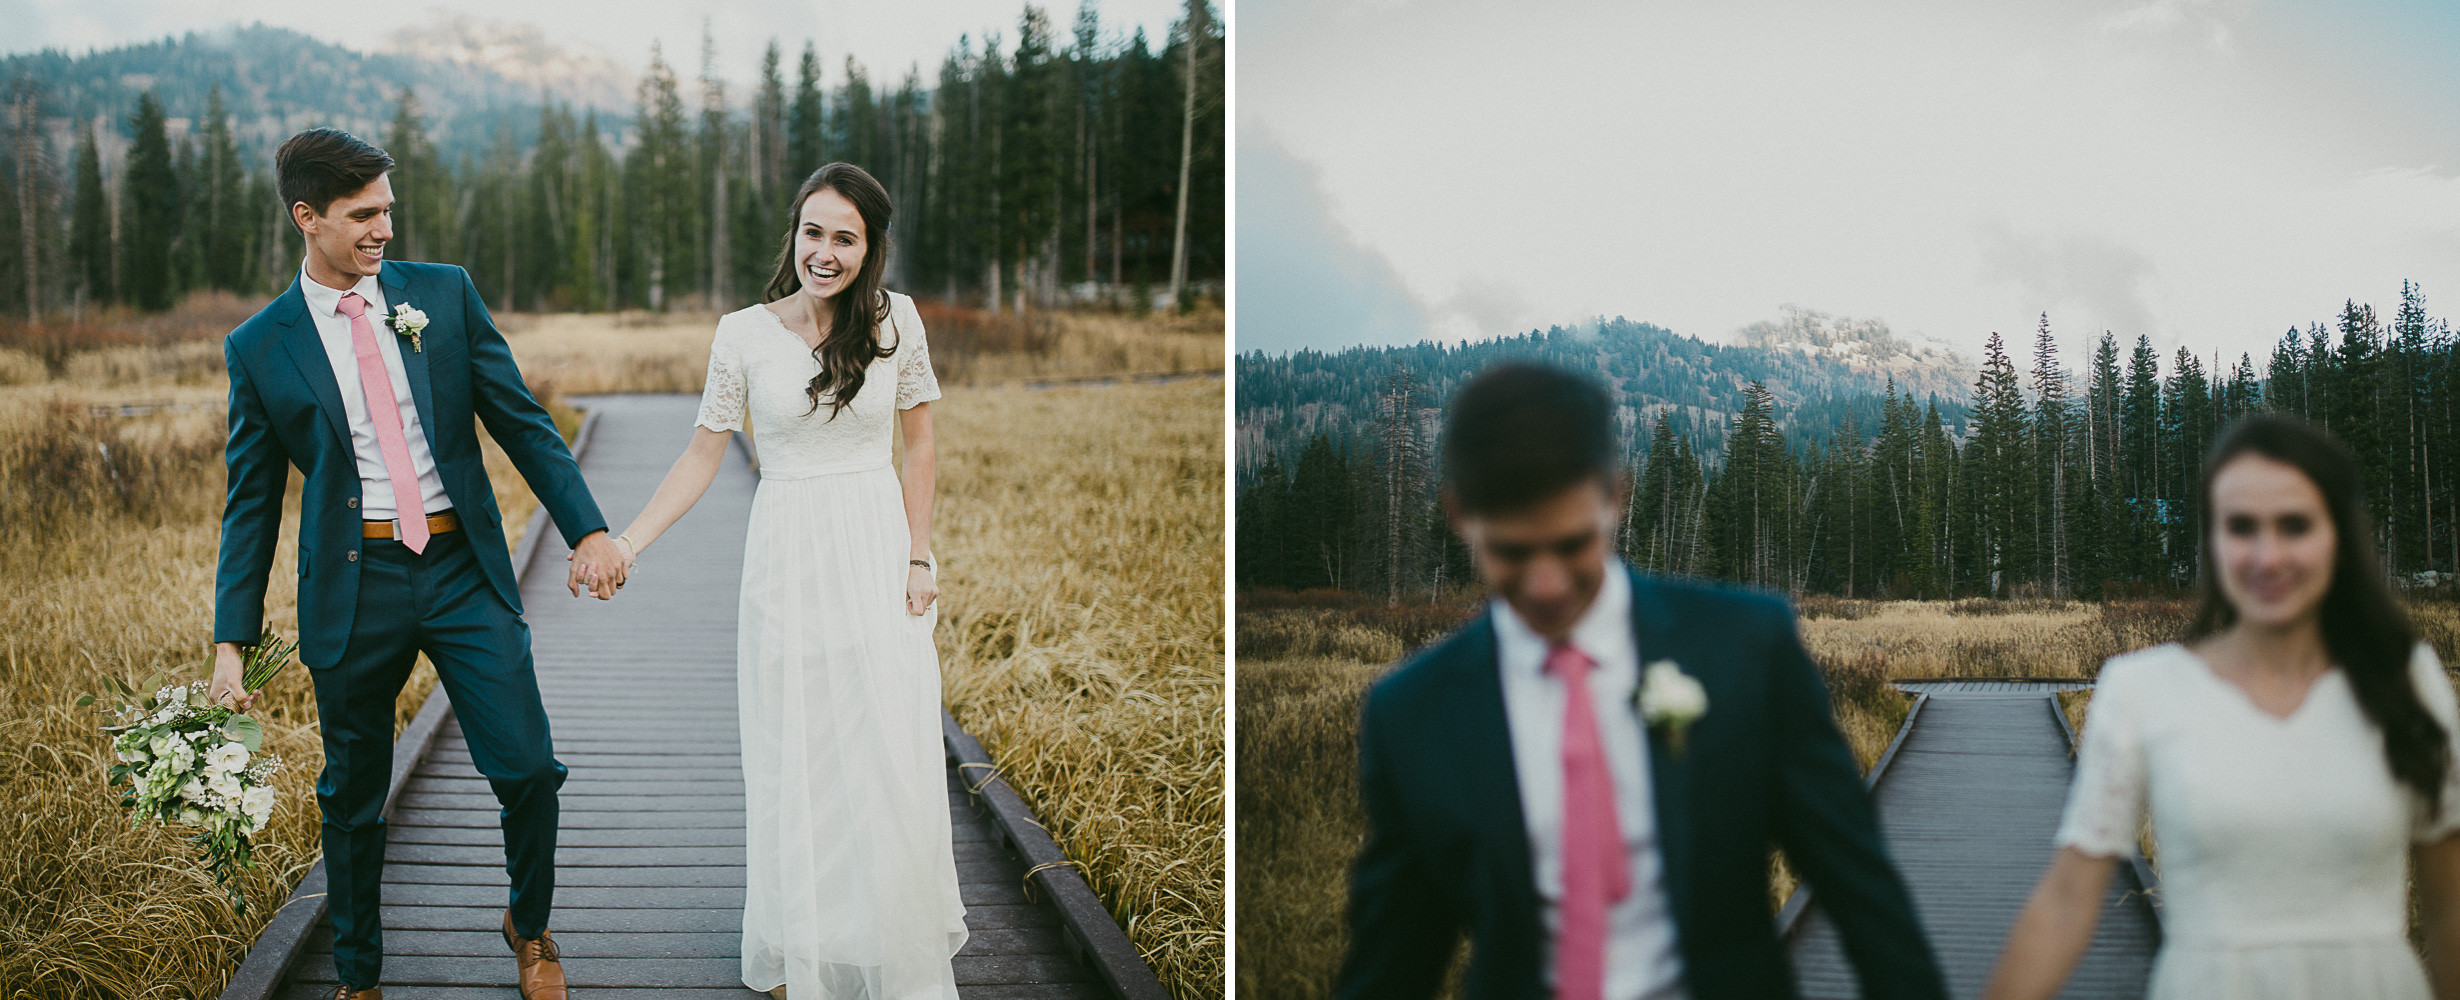 Salt-Lake-City-Wedding-Photographer-03.jpg